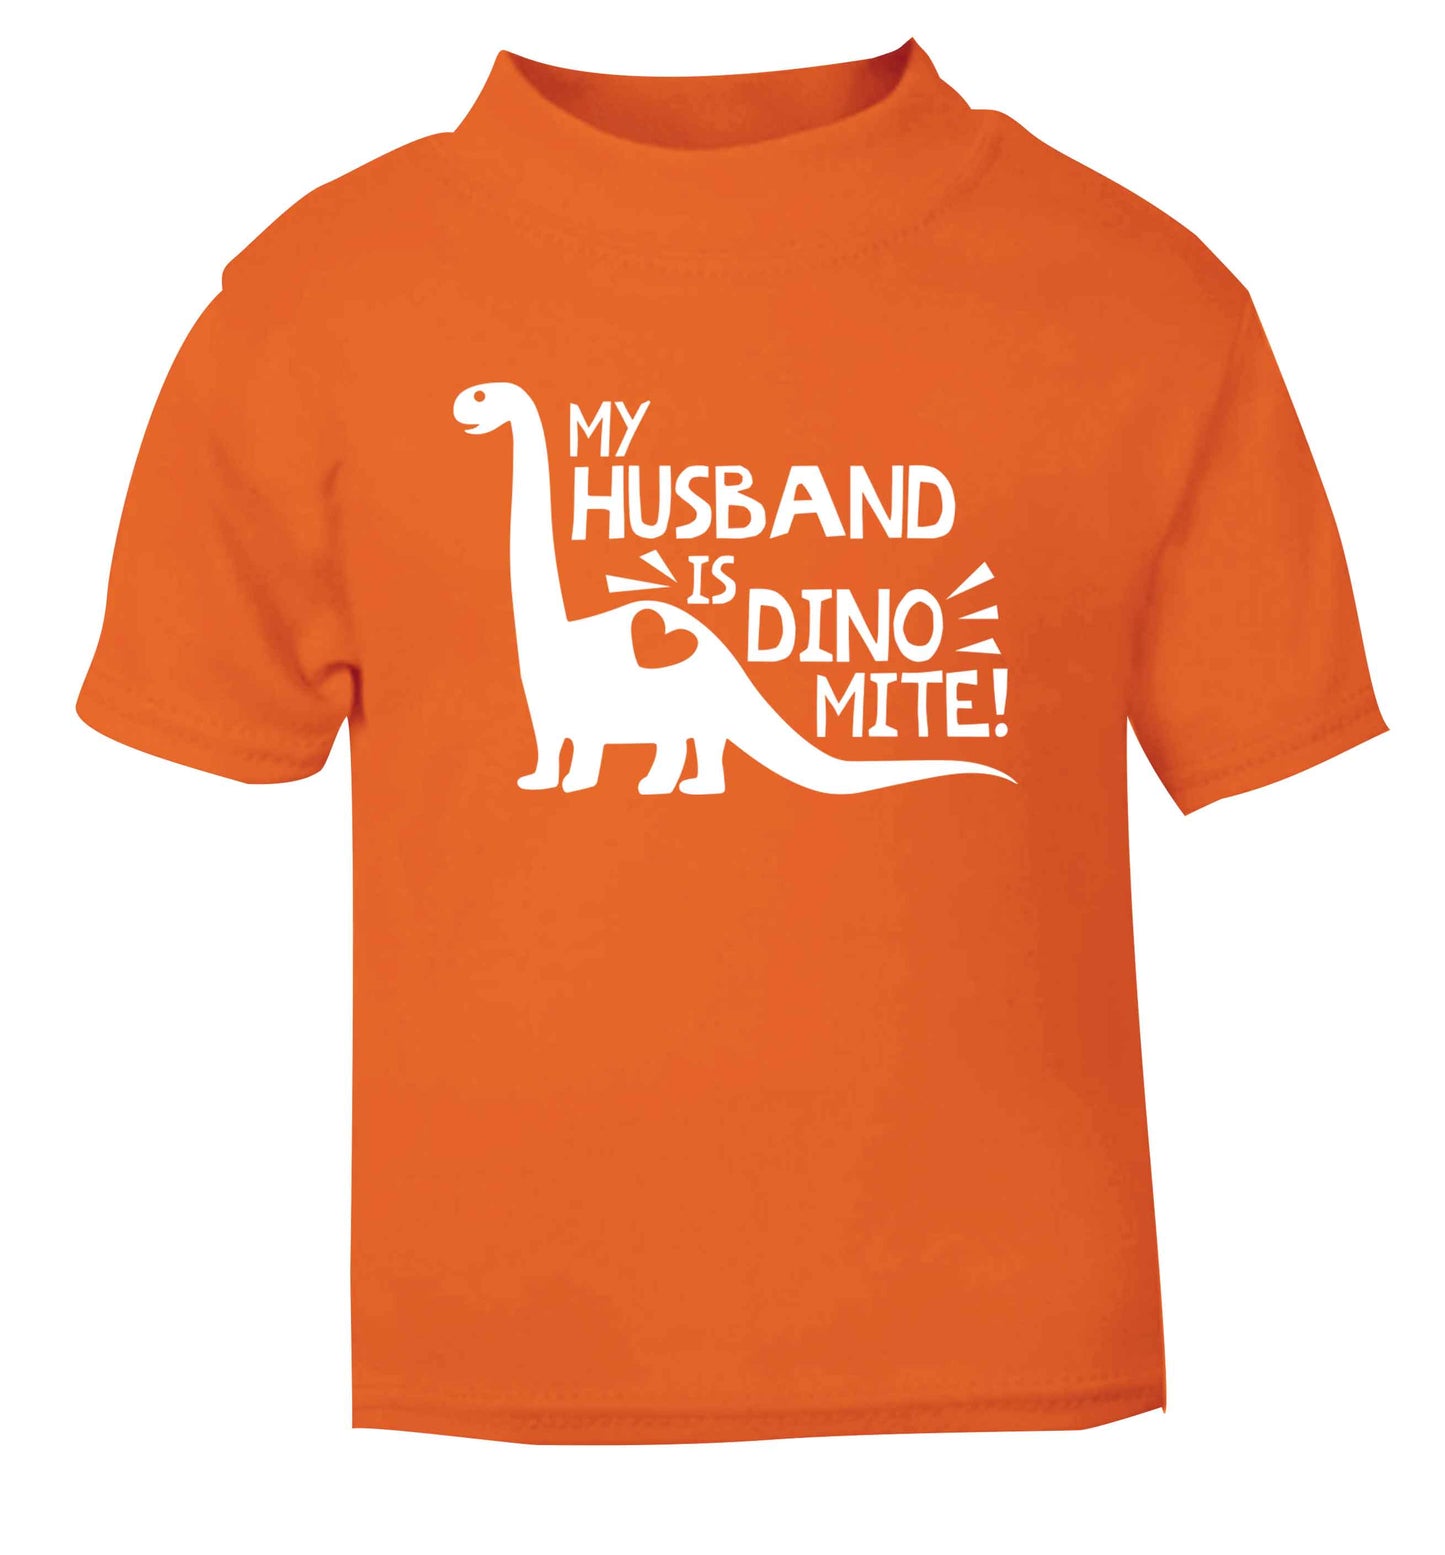 My husband is dinomite! orange Baby Toddler Tshirt 2 Years